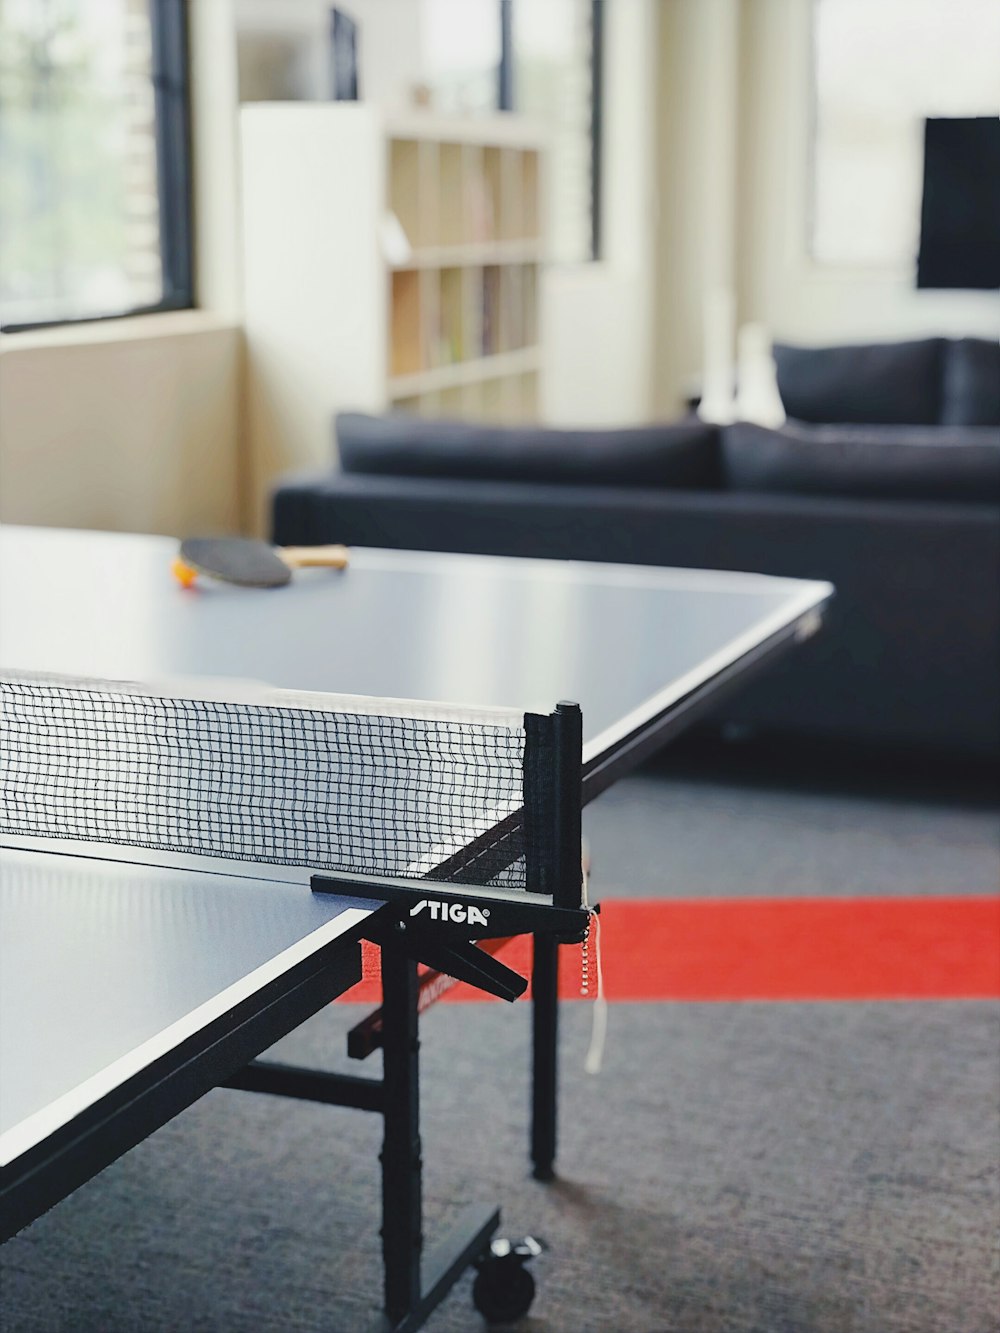 racchetta e pallina sul tavolo da ping pong